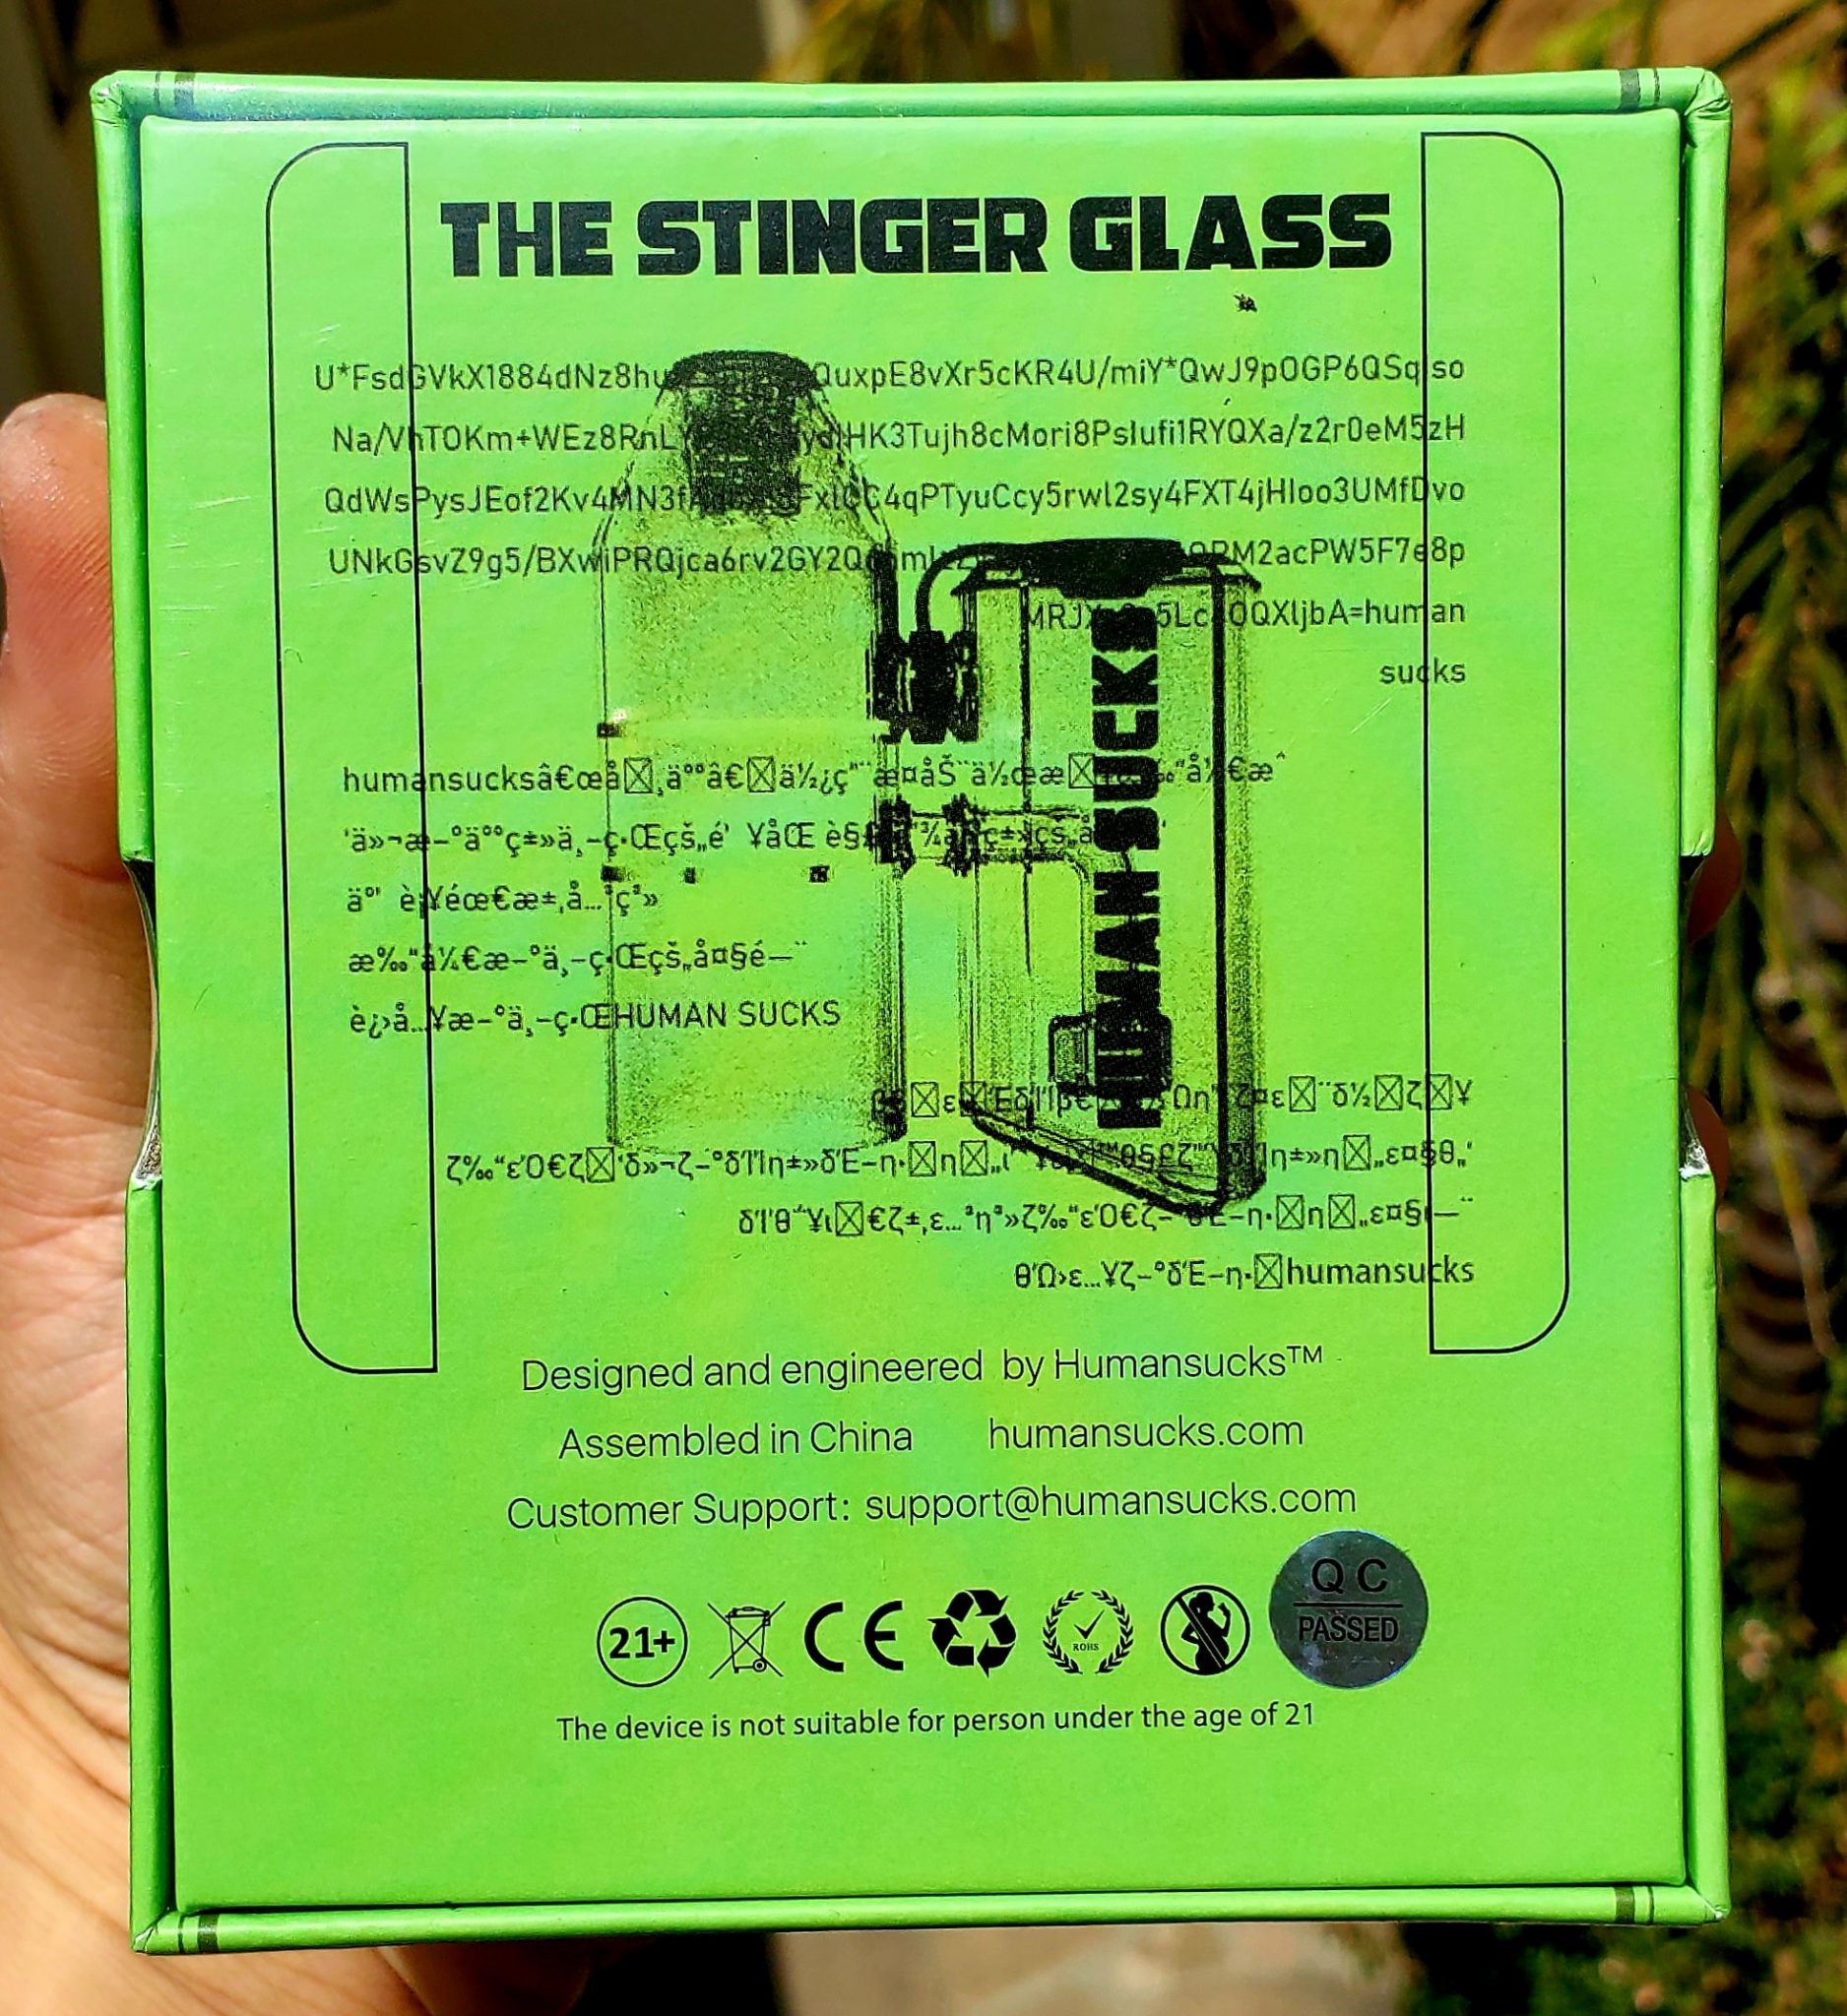 inhalco stinger glass package